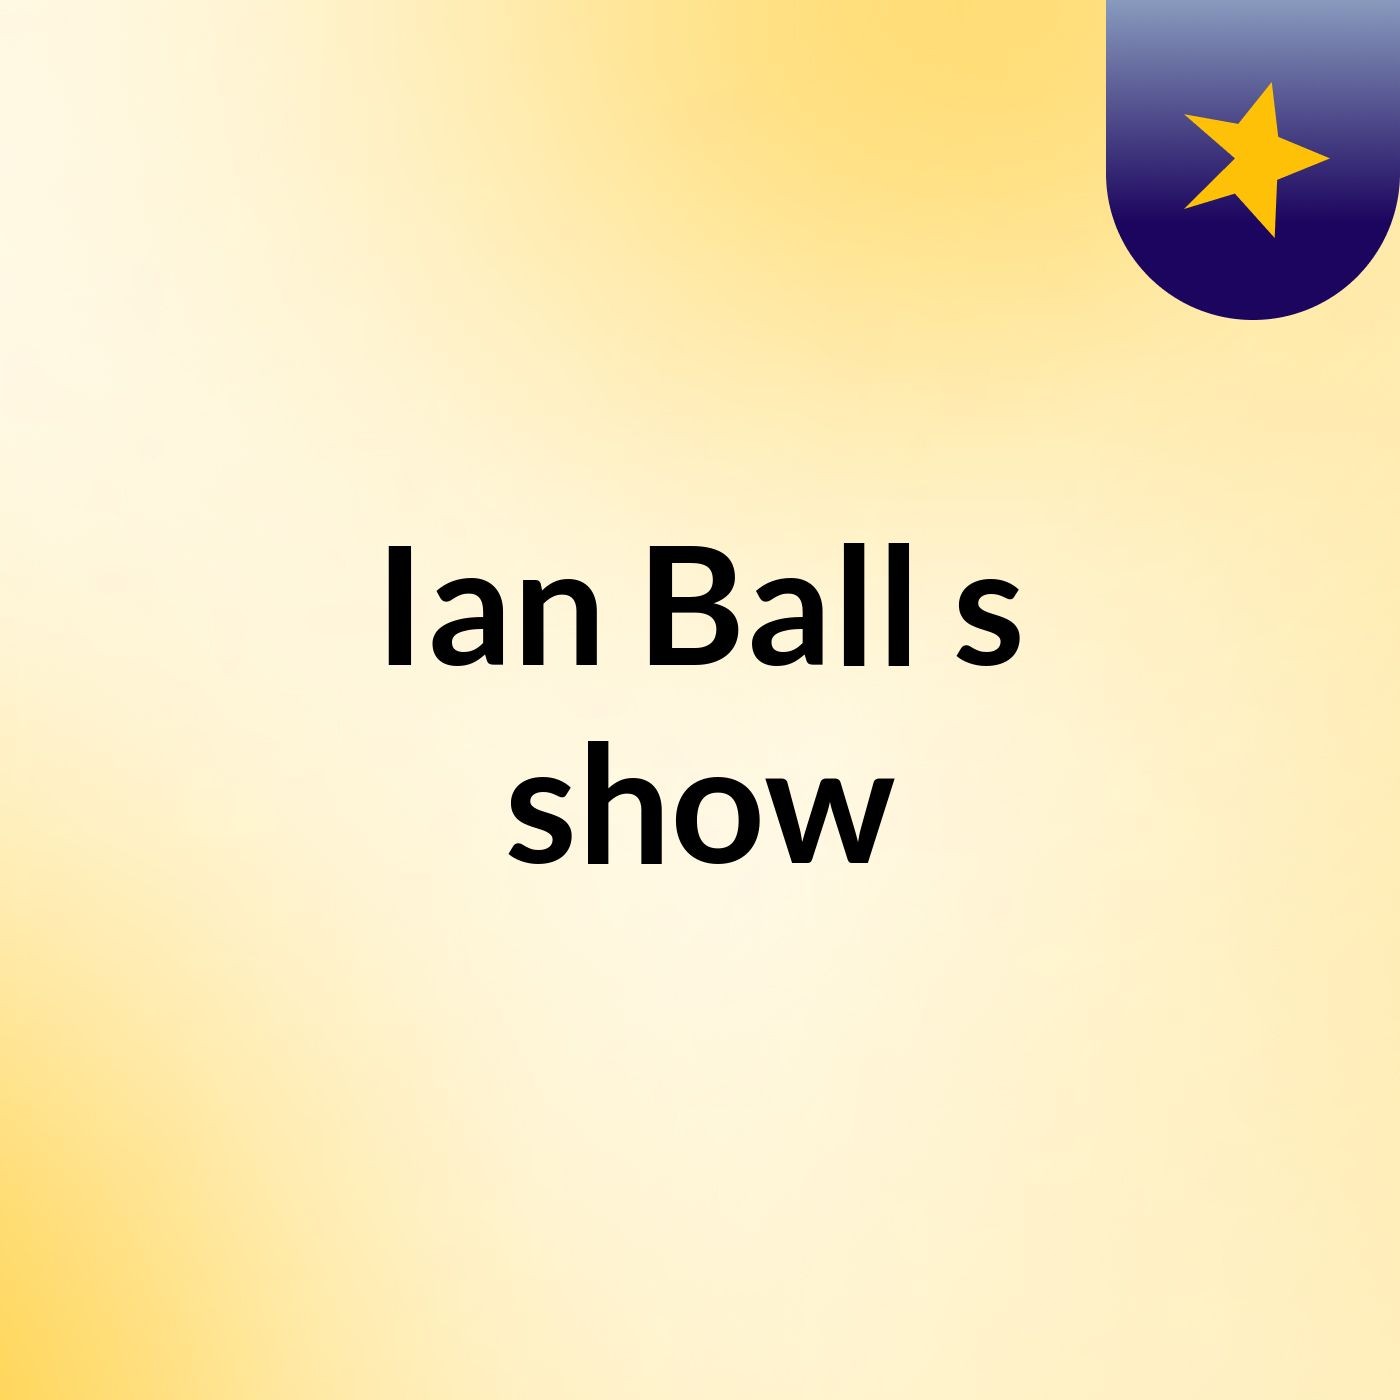 Ian Ball's show